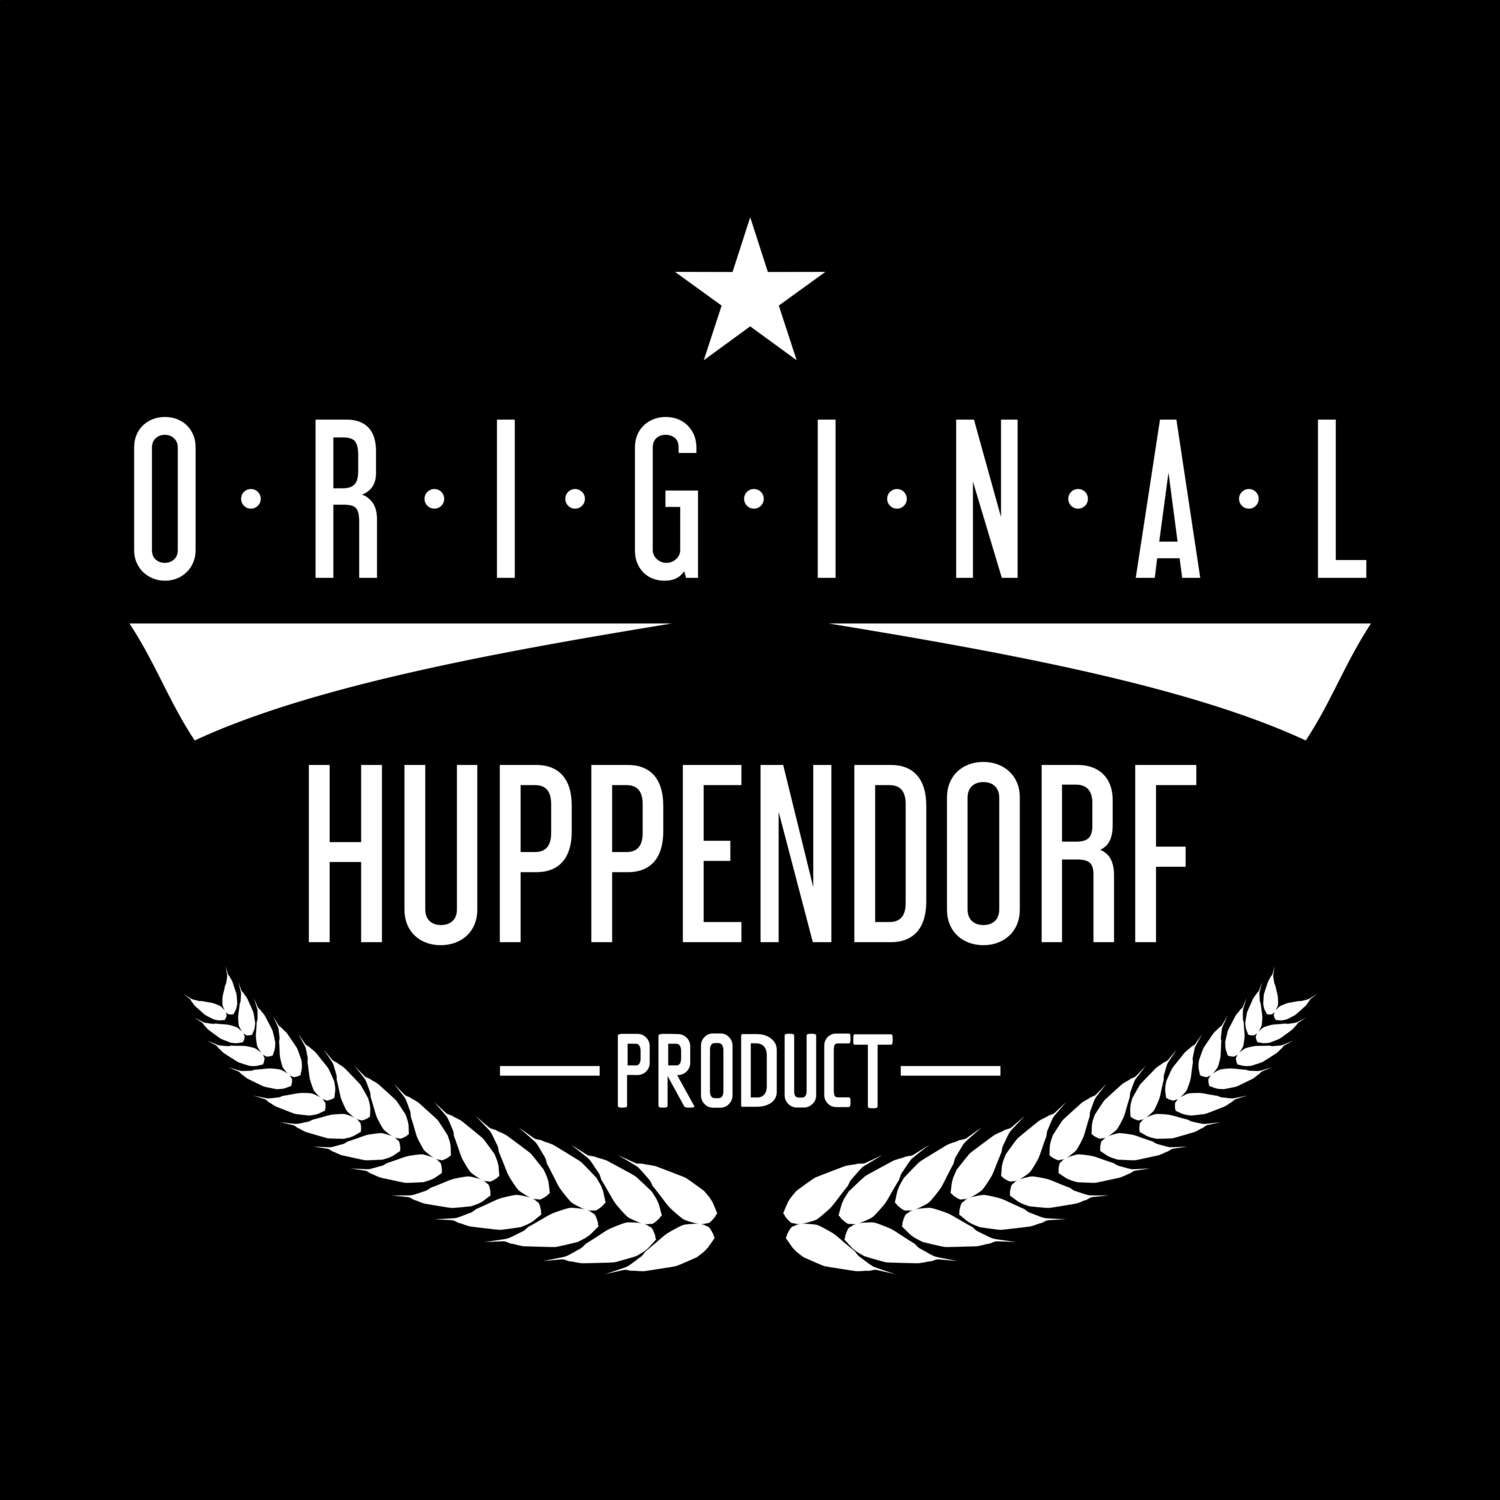 Huppendorf T-Shirt »Original Product«